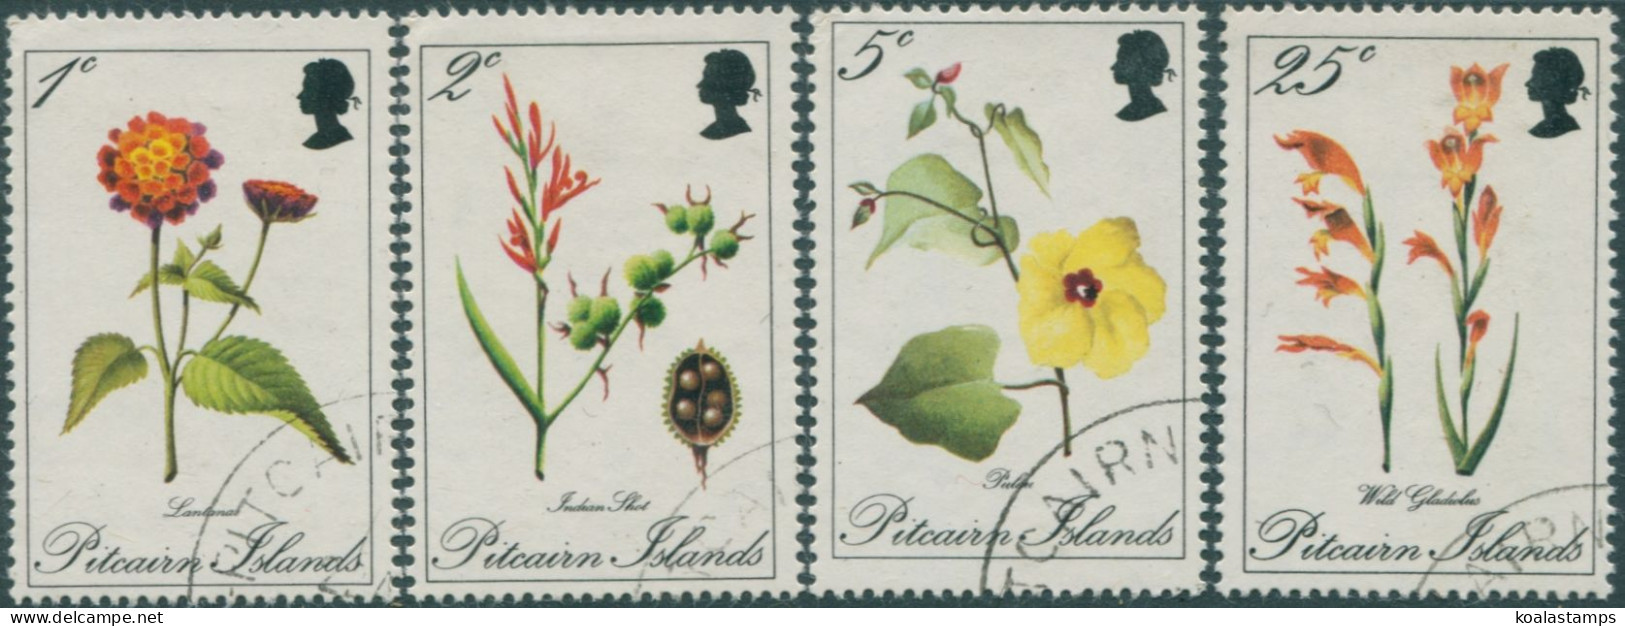 Pitcairn Islands 1970 SG107-110 Flowers Set FU - Pitcairn Islands